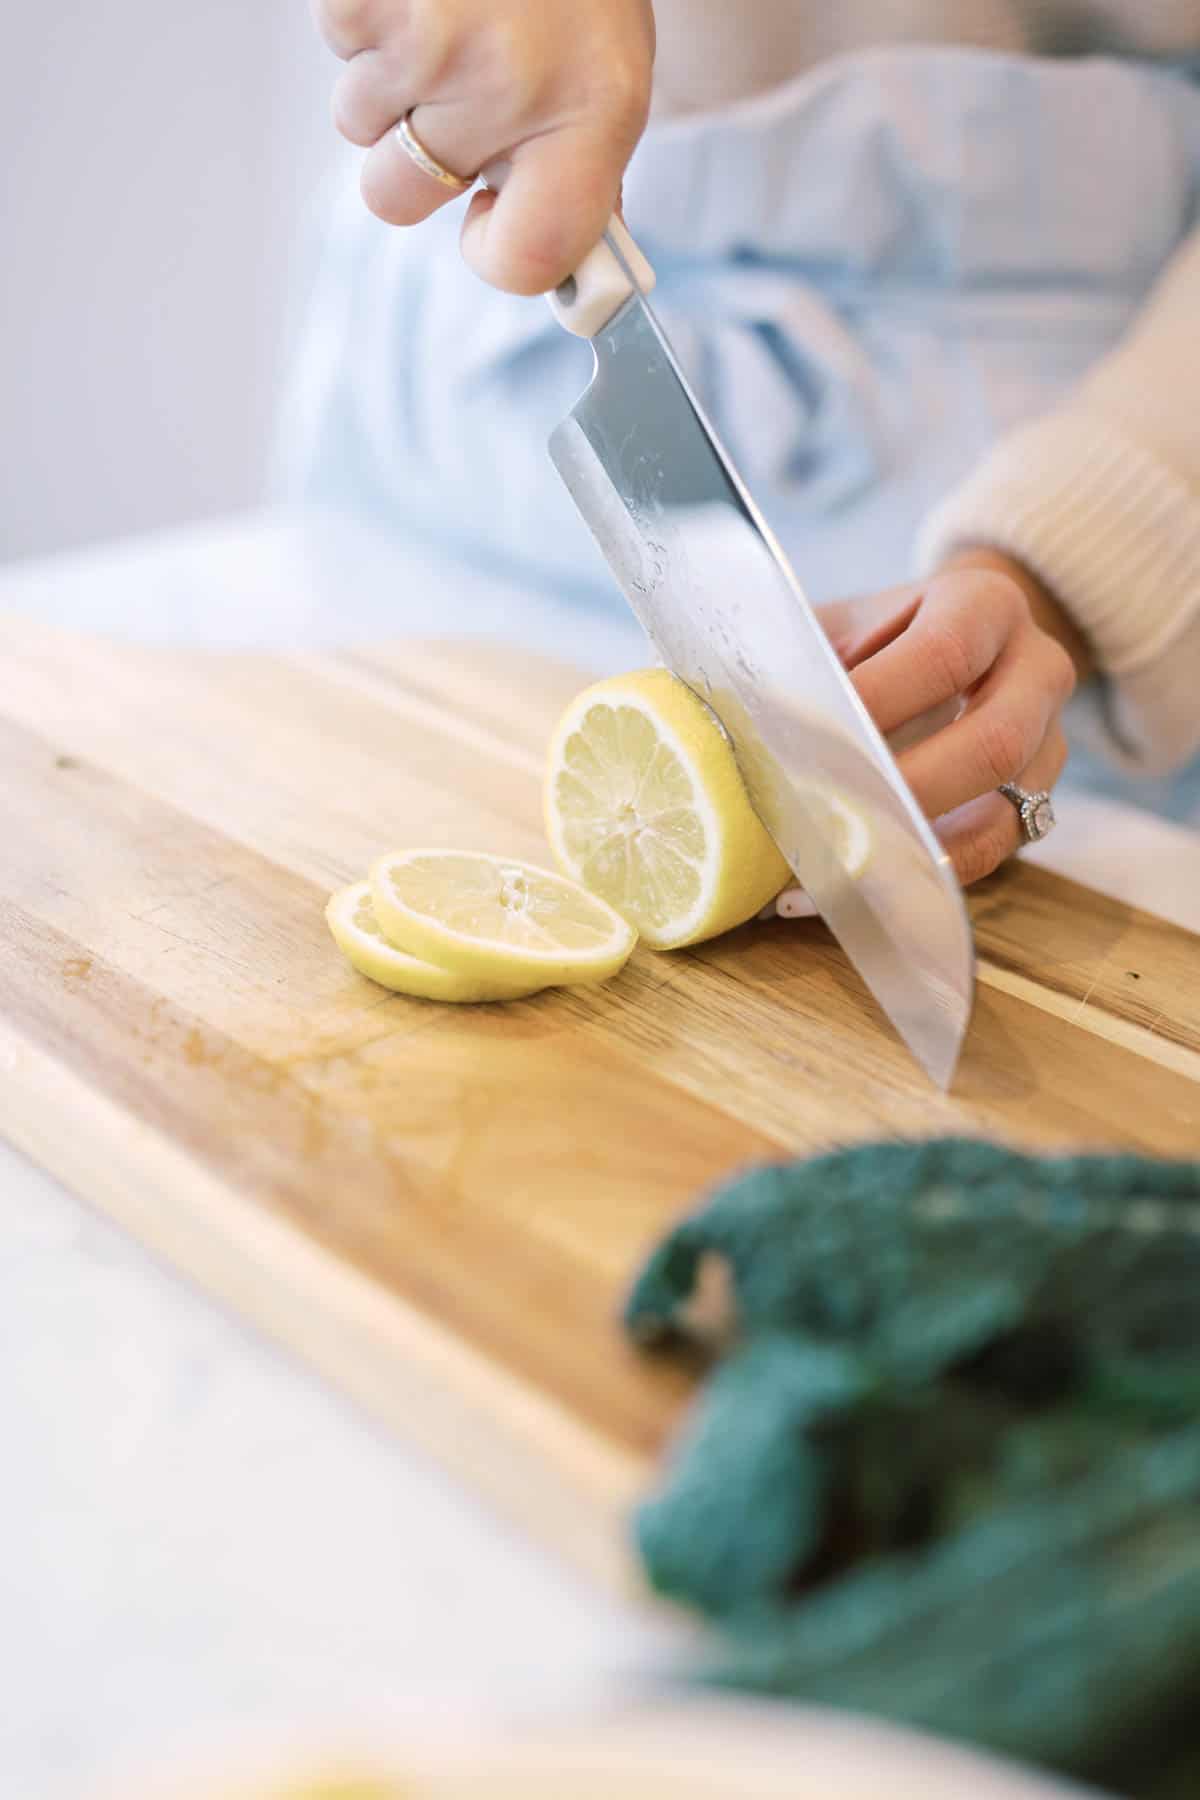 Woman cutting a lemon on a cutting board next to kale.